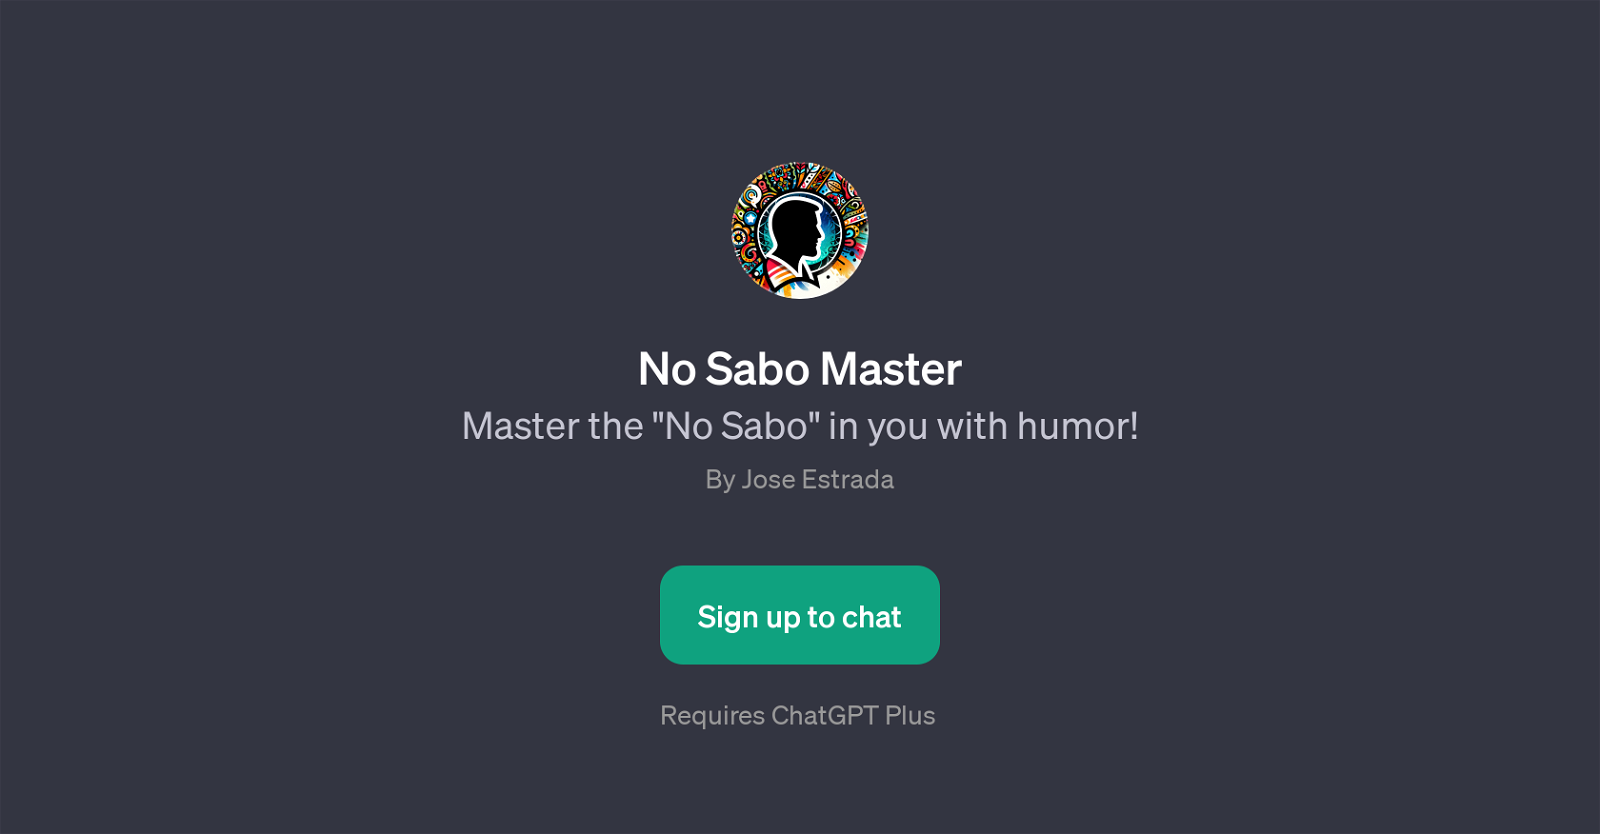 No Sabo Master website